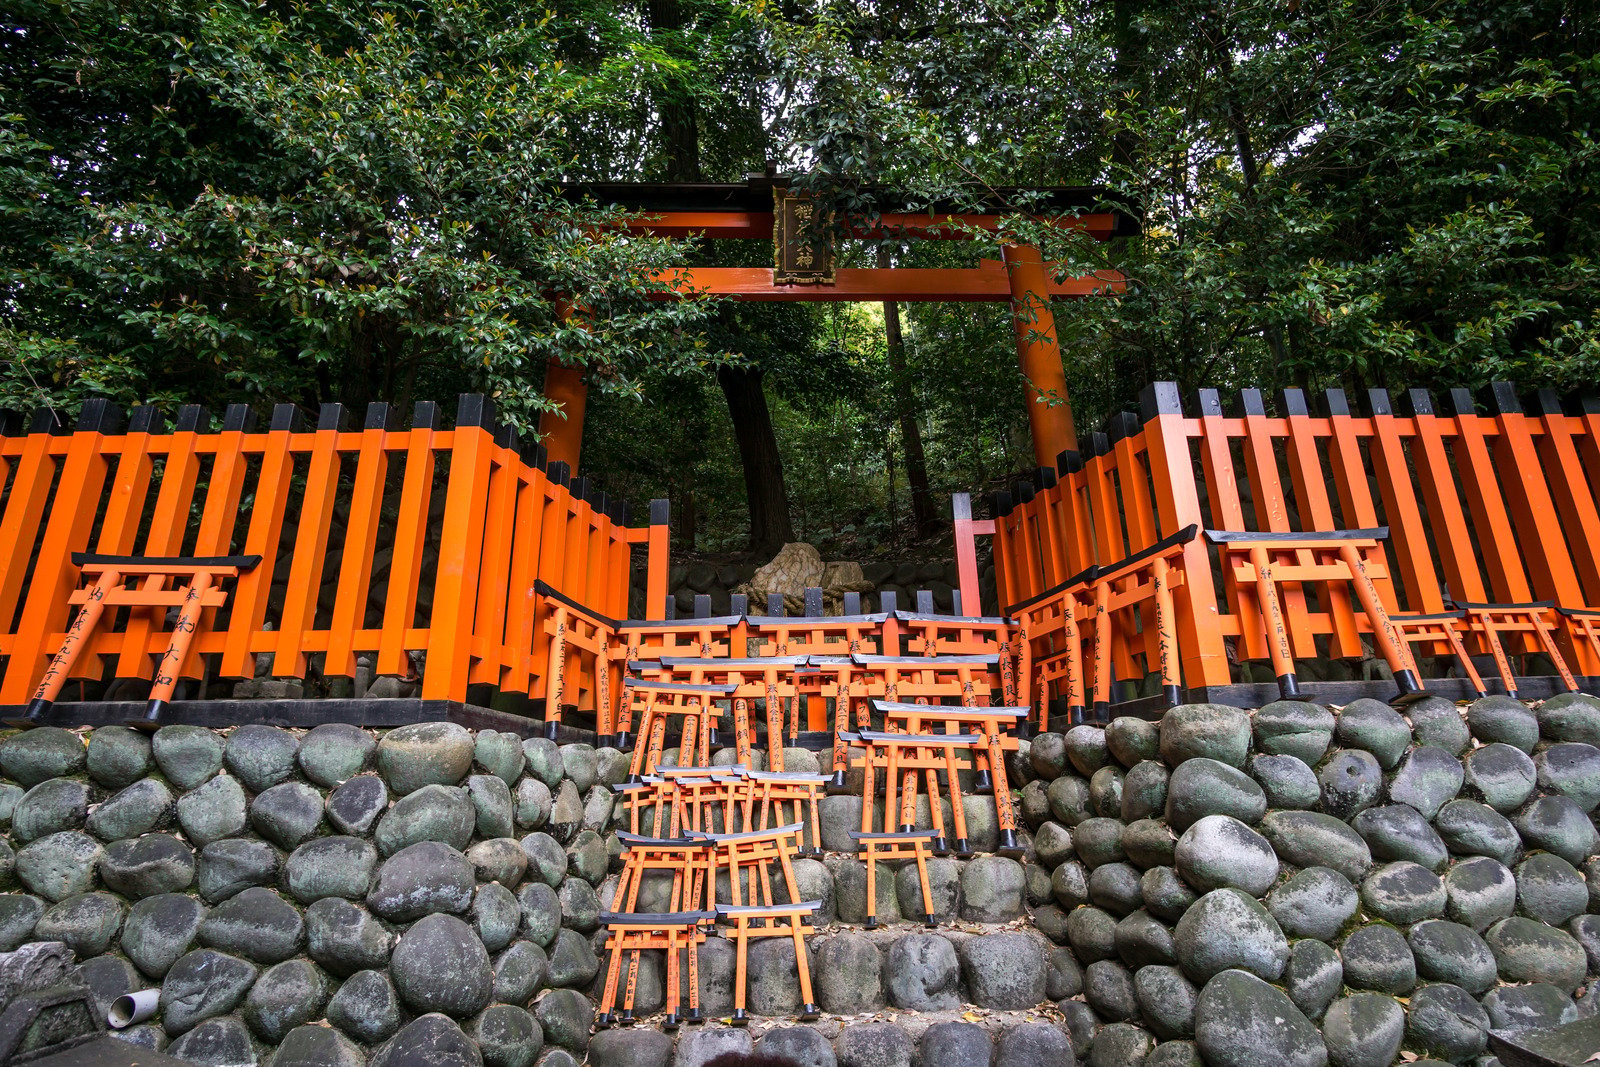 Đền ngàn cổng Fushimi Inari Taisha